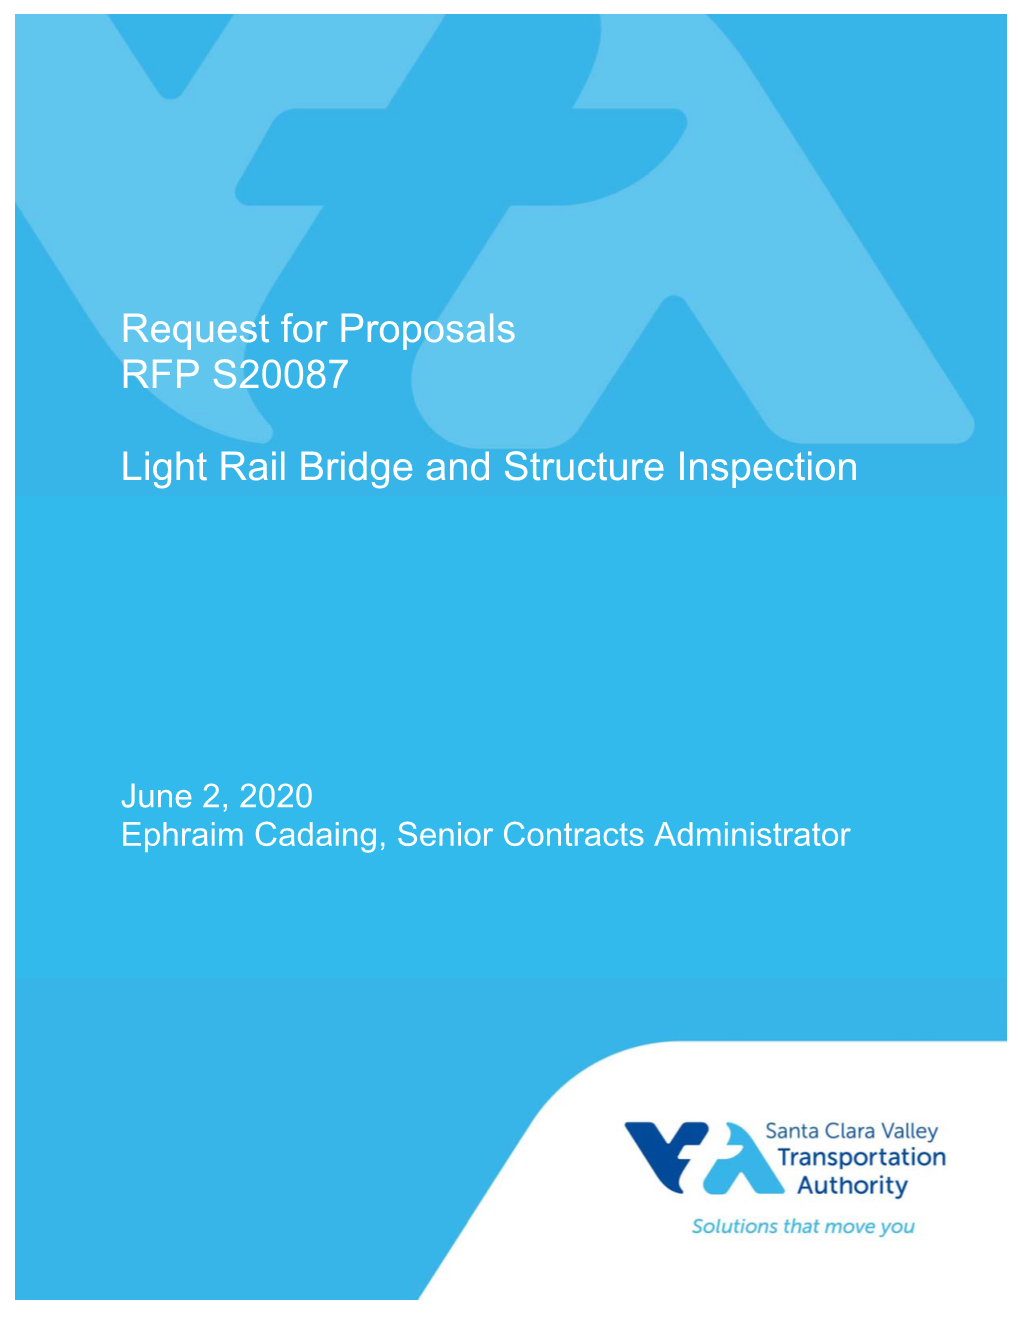 Request for Proposals RFP S20087 Light Rail Bridge And